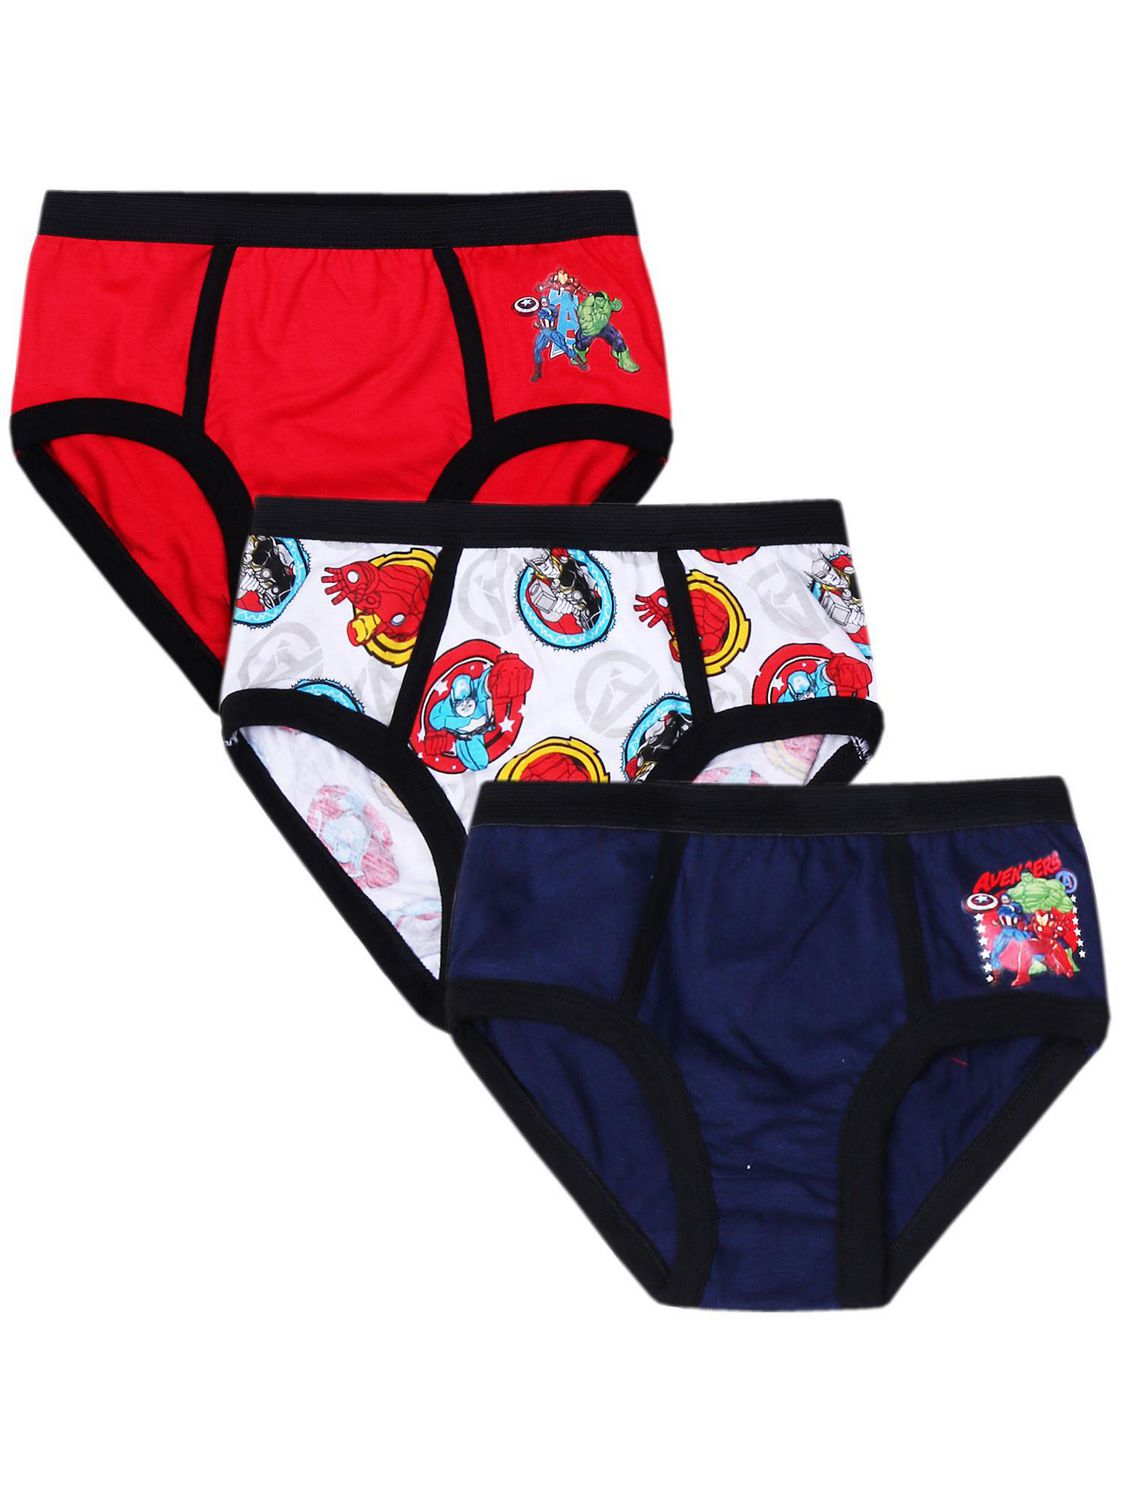 Avengers three pack underwear for boys | Walmart Canada